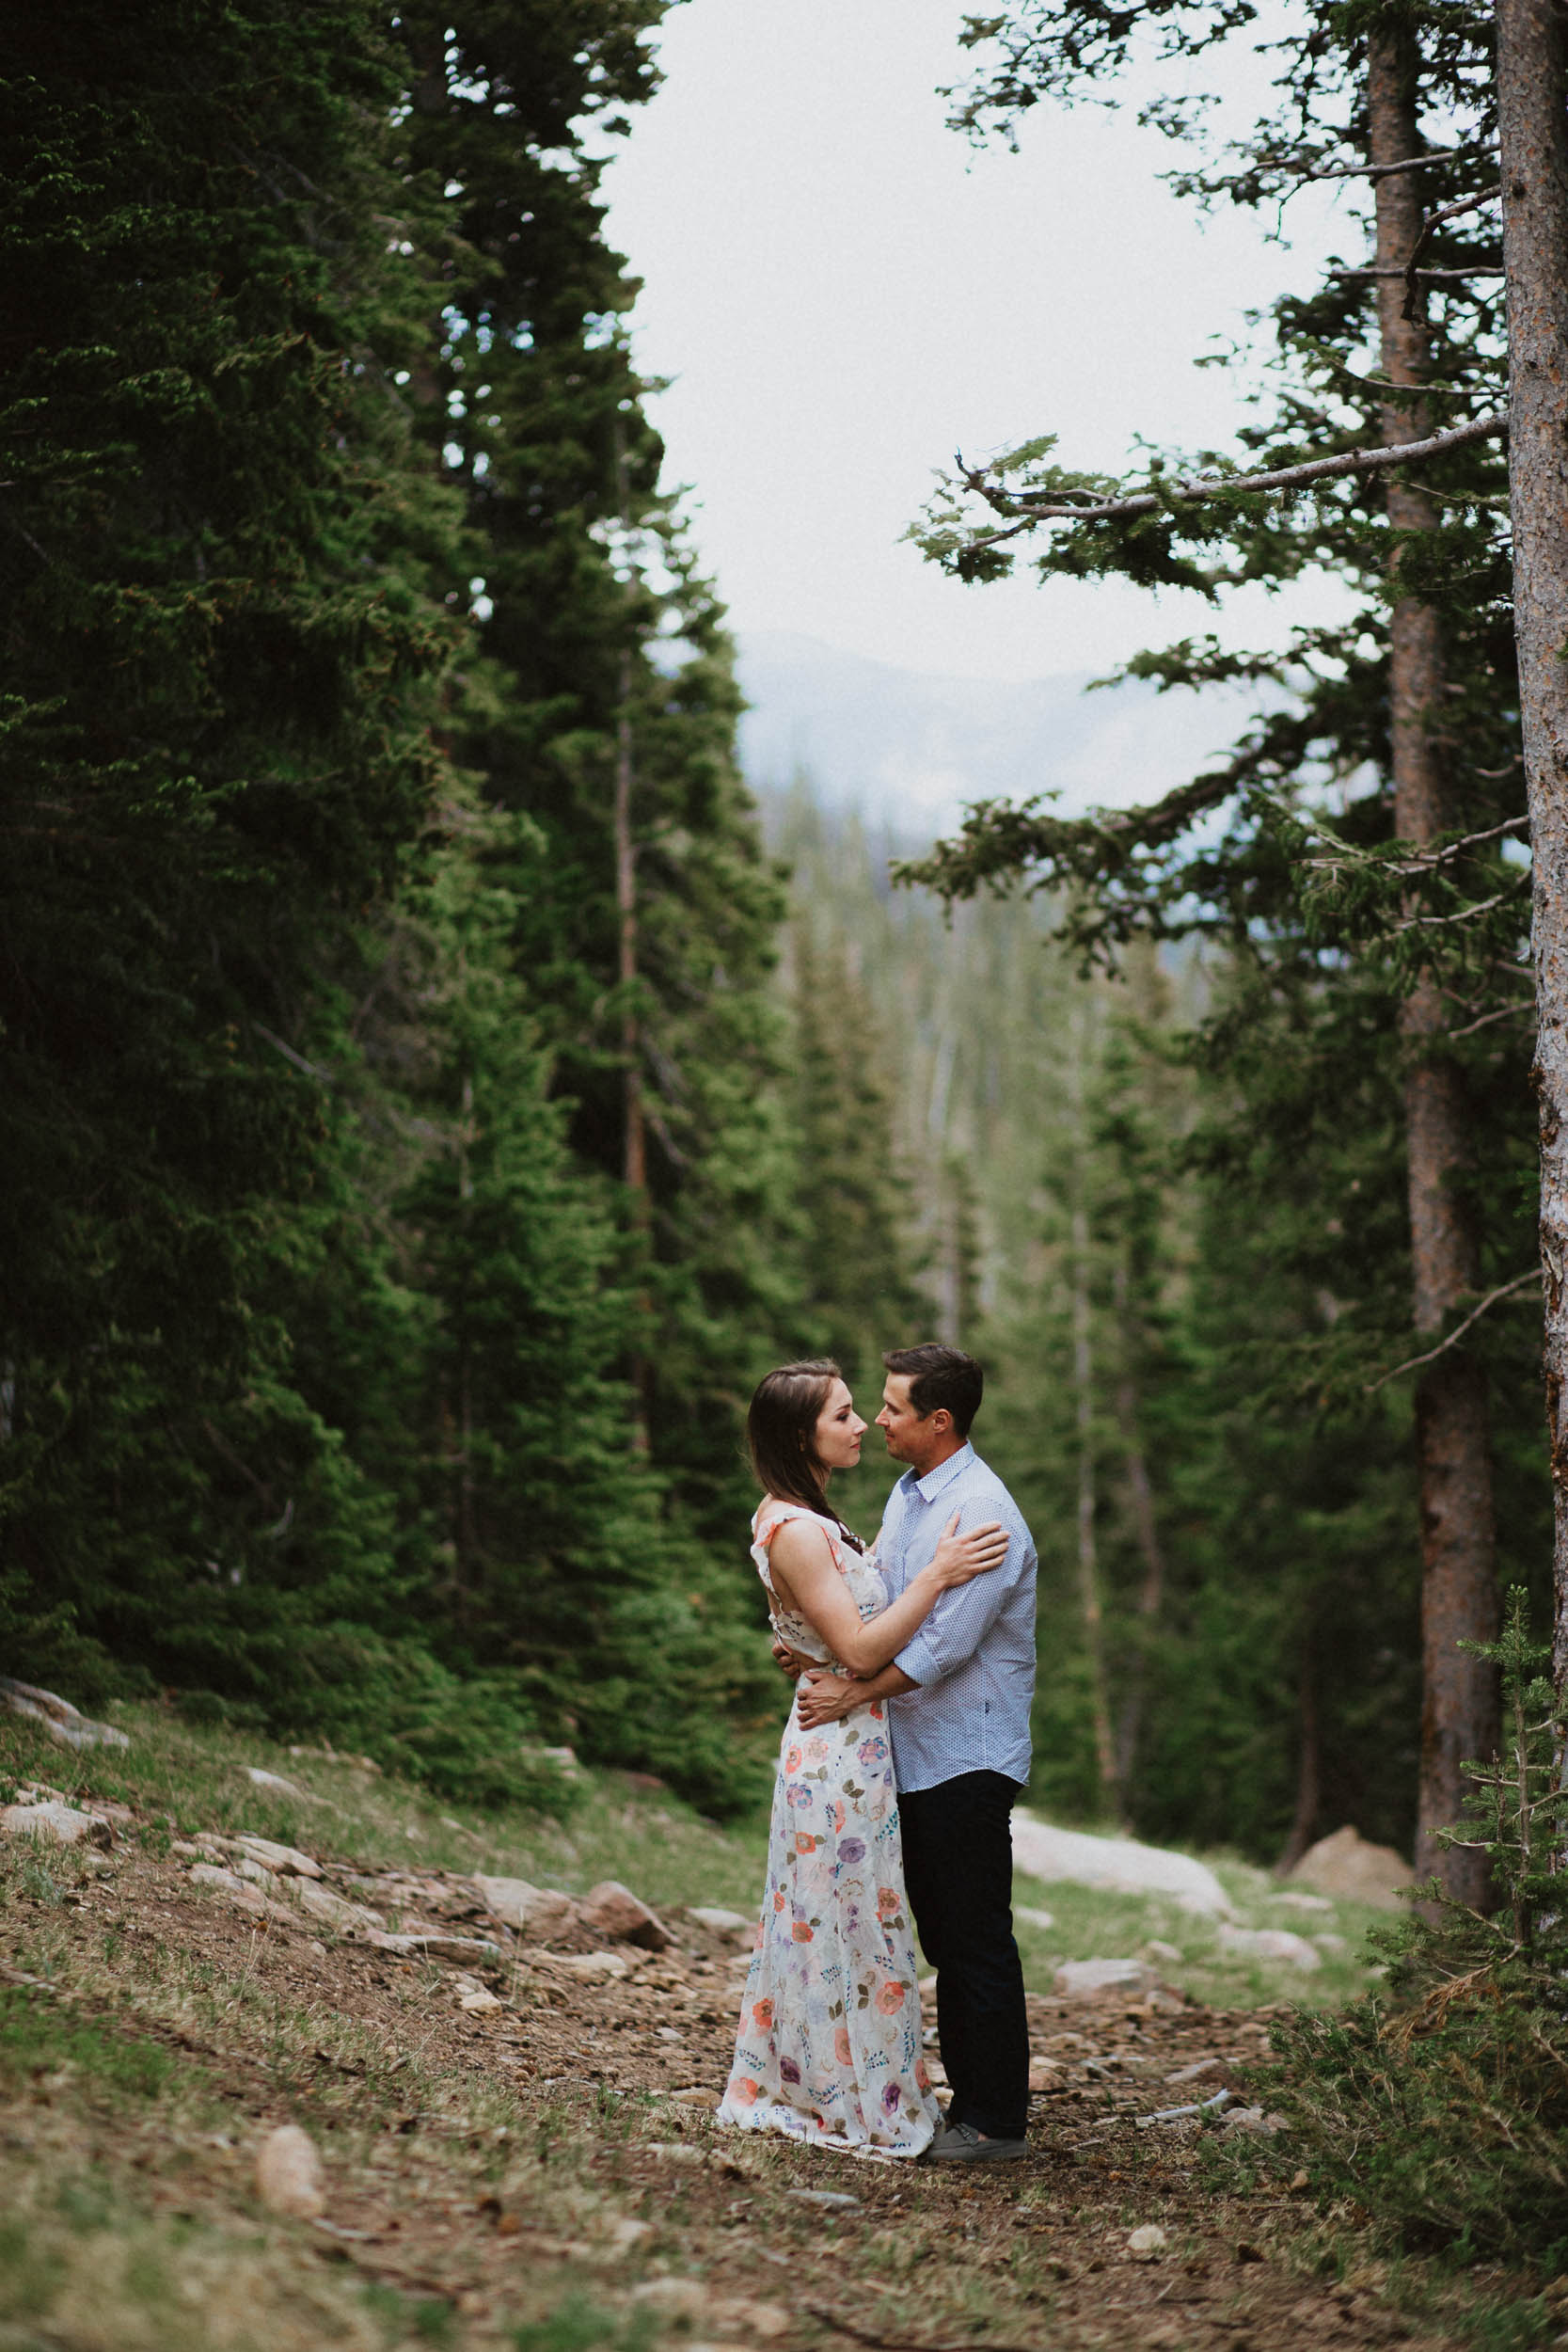 Rocky-Mountain-National-Park-Colorado-Engagement-025@2x.jpg